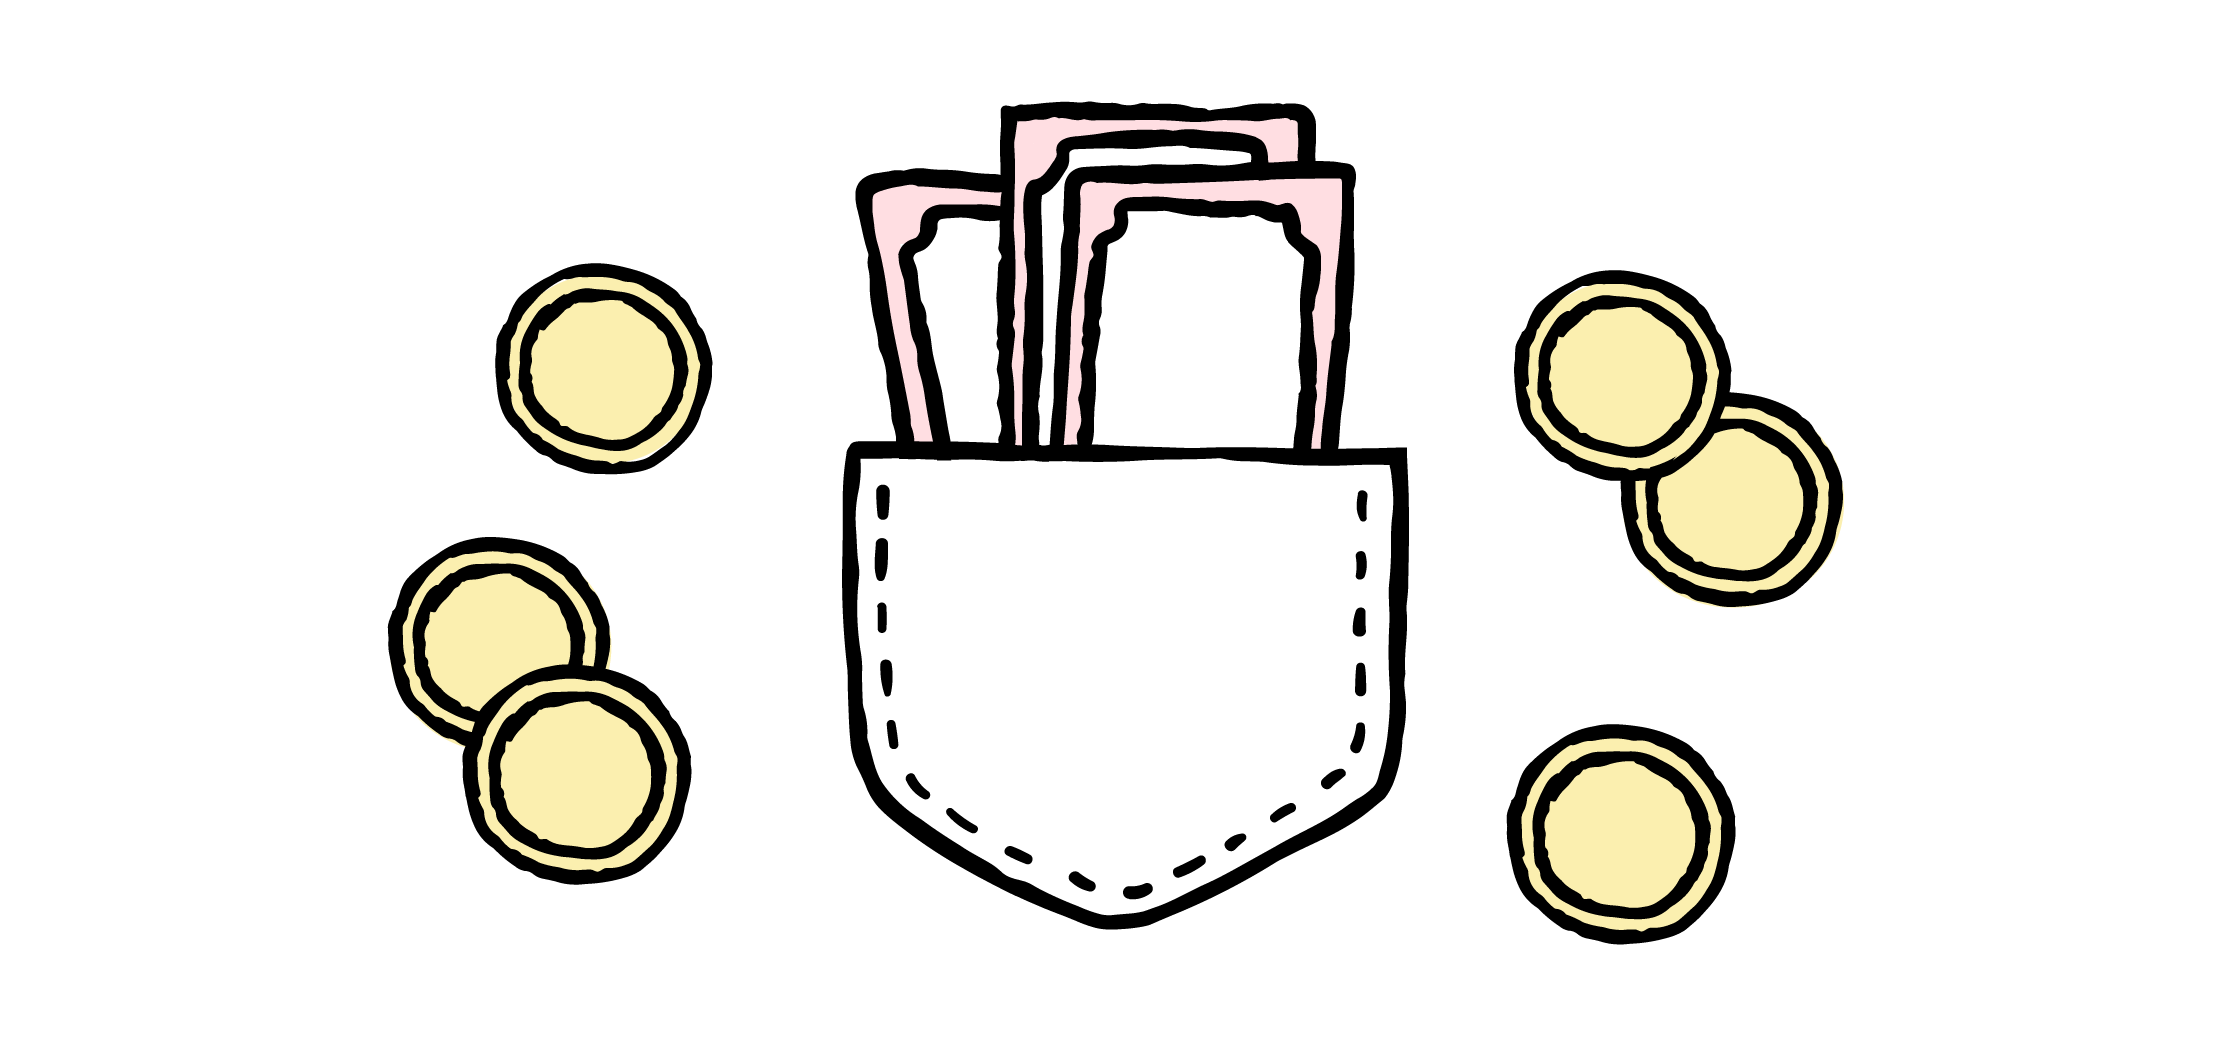 Money bills and coins